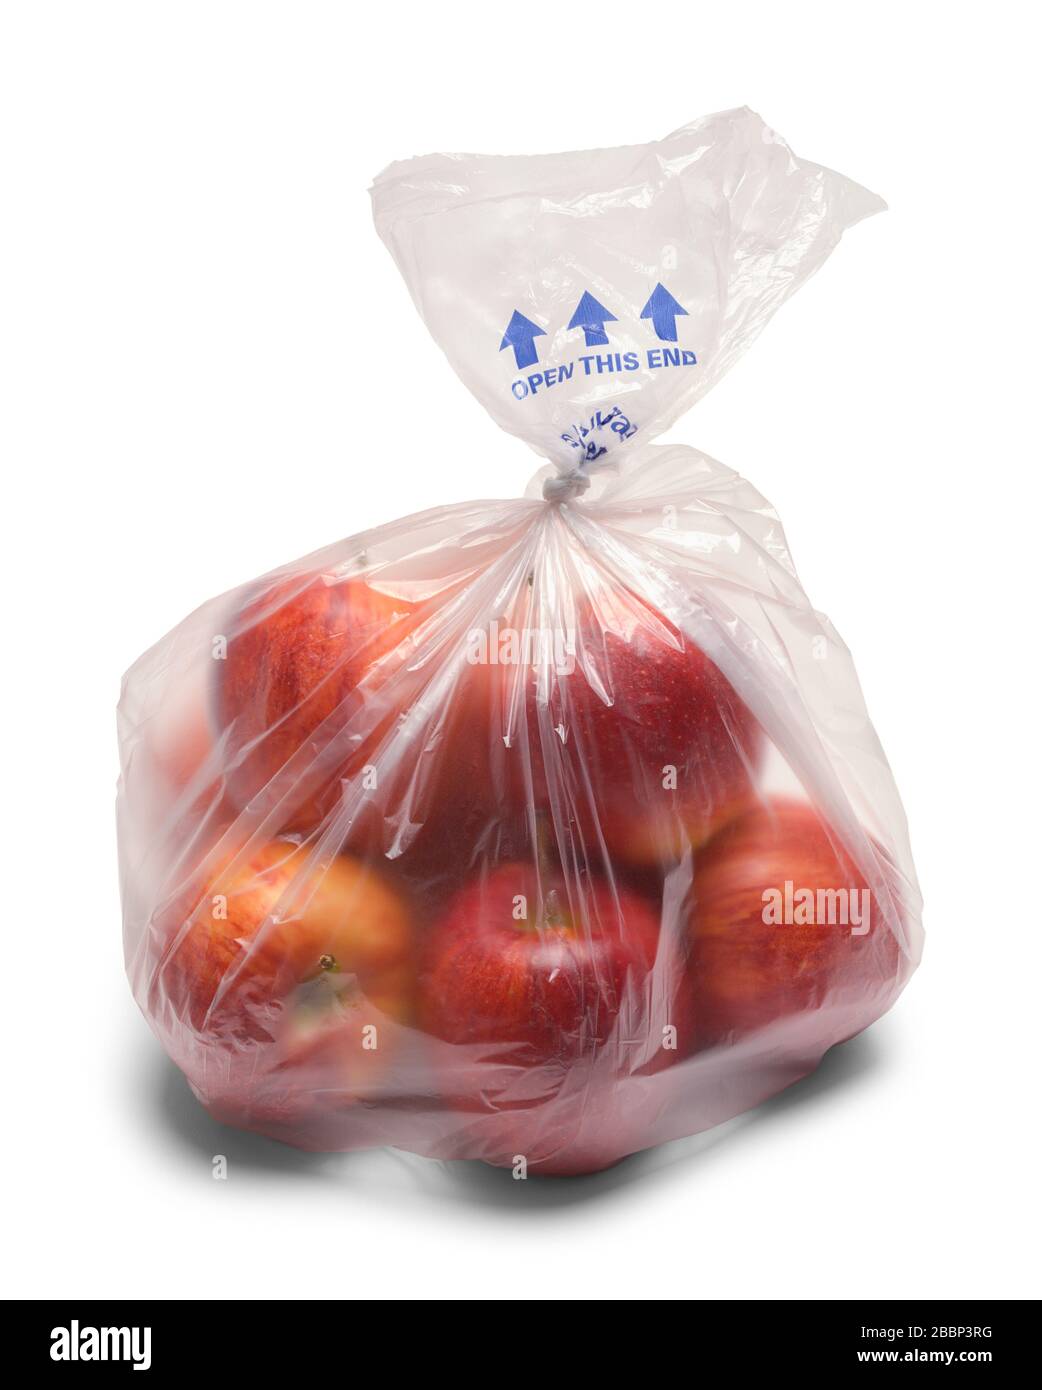 https://c8.alamy.com/comp/2BBP3RG/small-bag-of-apples-in-plastic-bag-isolated-on-white-2BBP3RG.jpg